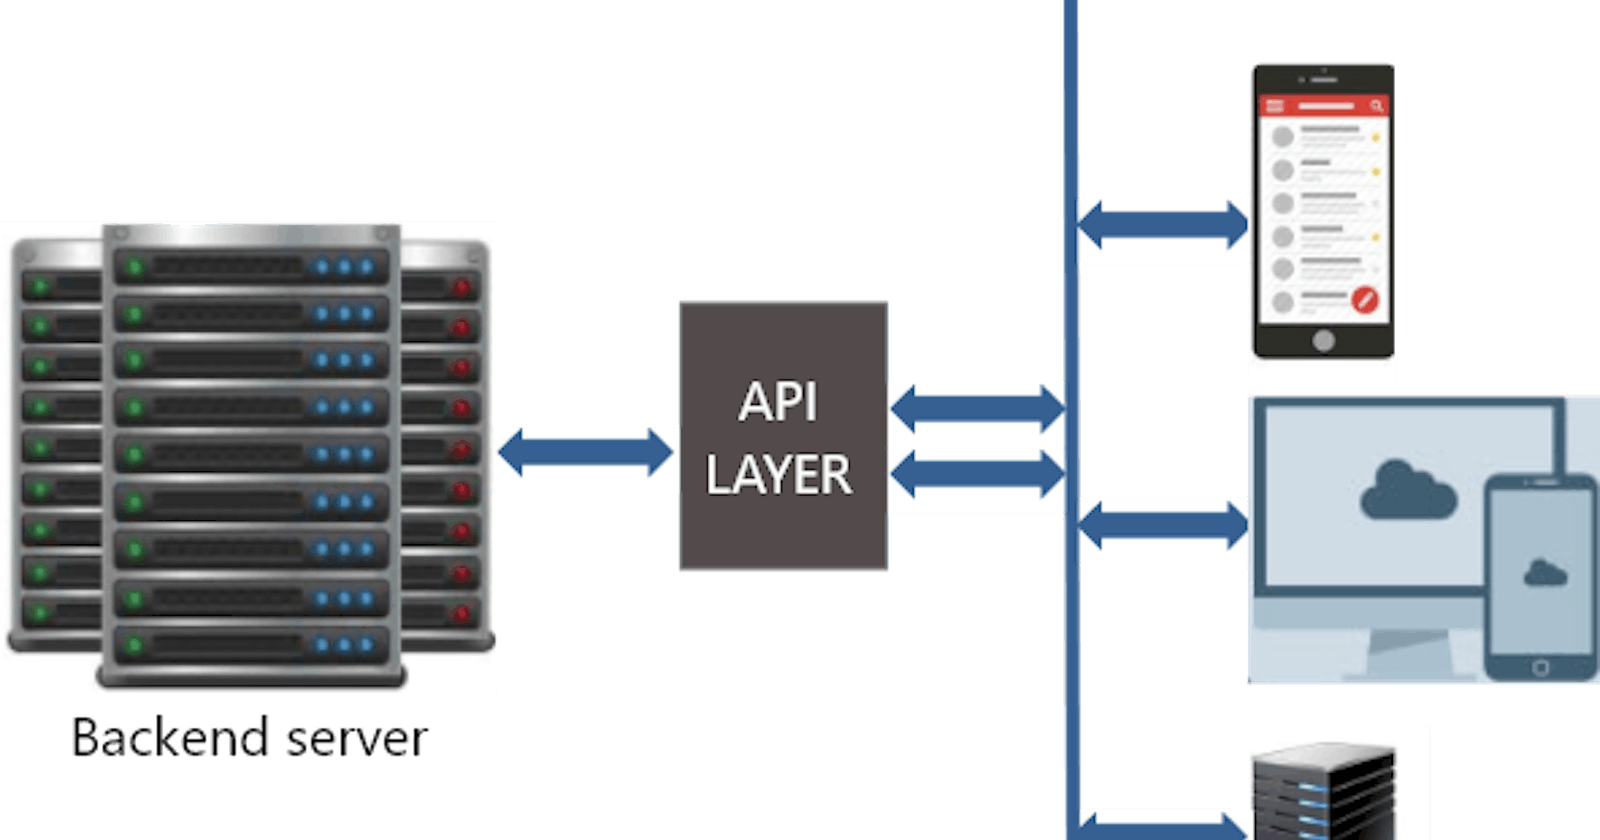 The abc's of building an API